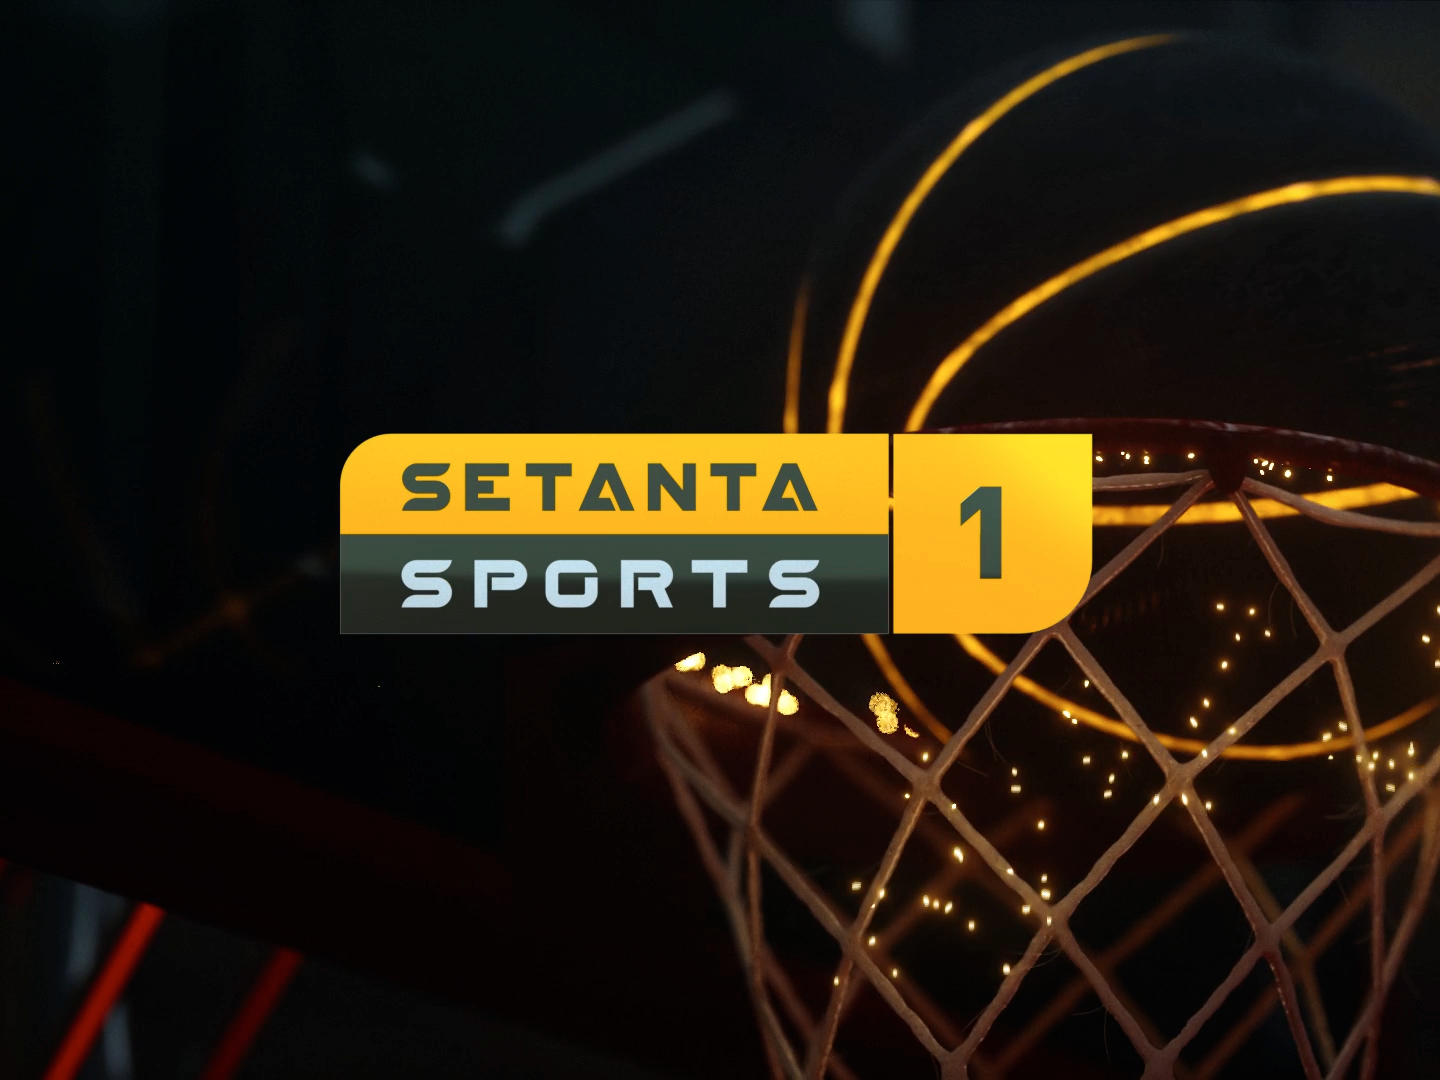 Setanta sports 1 прямой. Сетанта спорт. Сетанта спорт лого. Setanta Sports + логотип телеканала. Setanta Sport 1 логотип Телеканал.